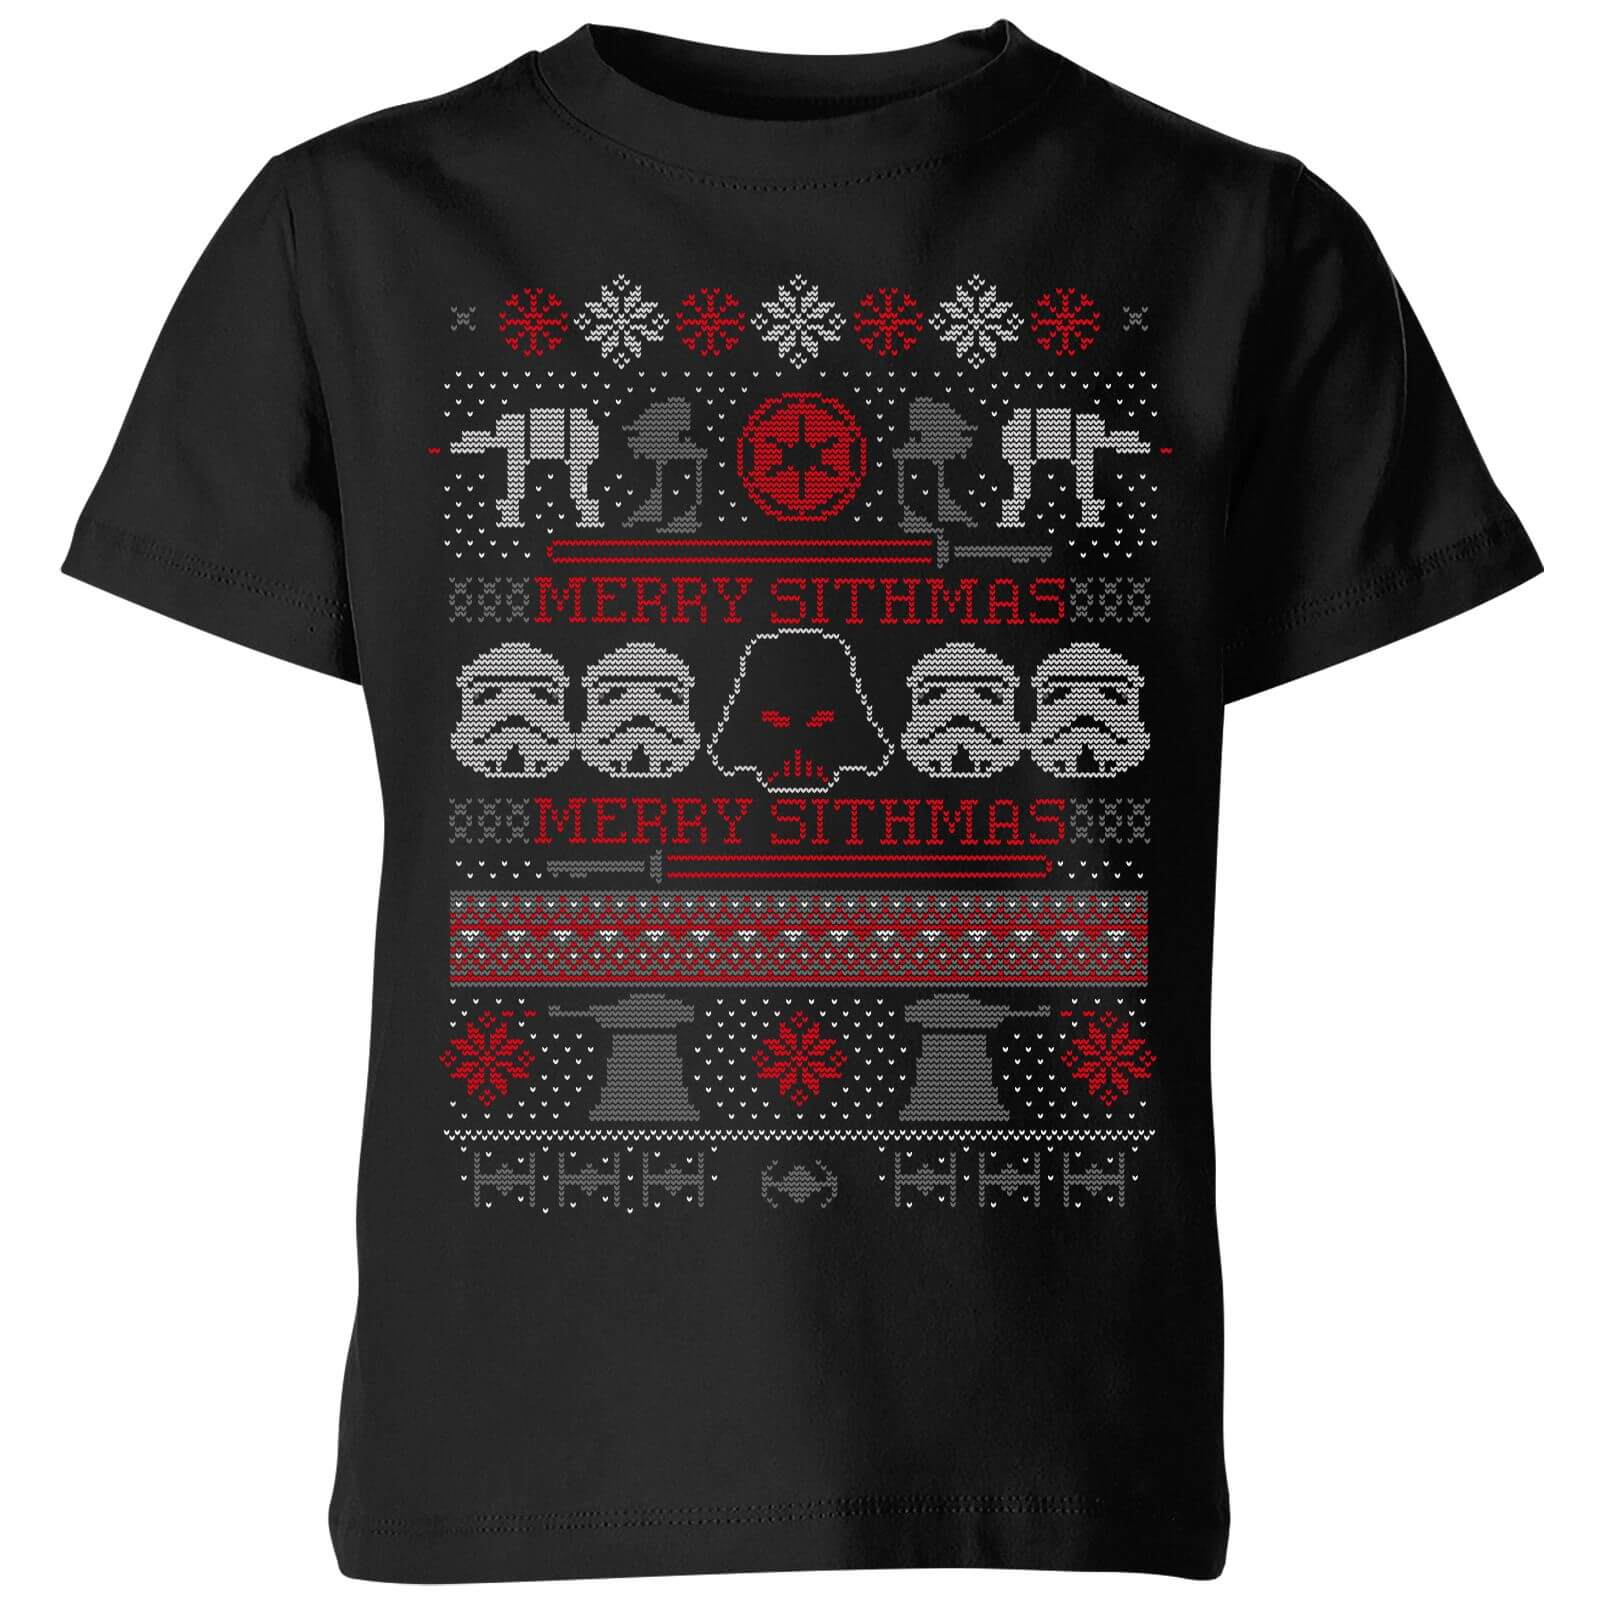 Star Wars Merry Sithmas Knit Kids Christmas T-Shirt - Black - 11-12 Years